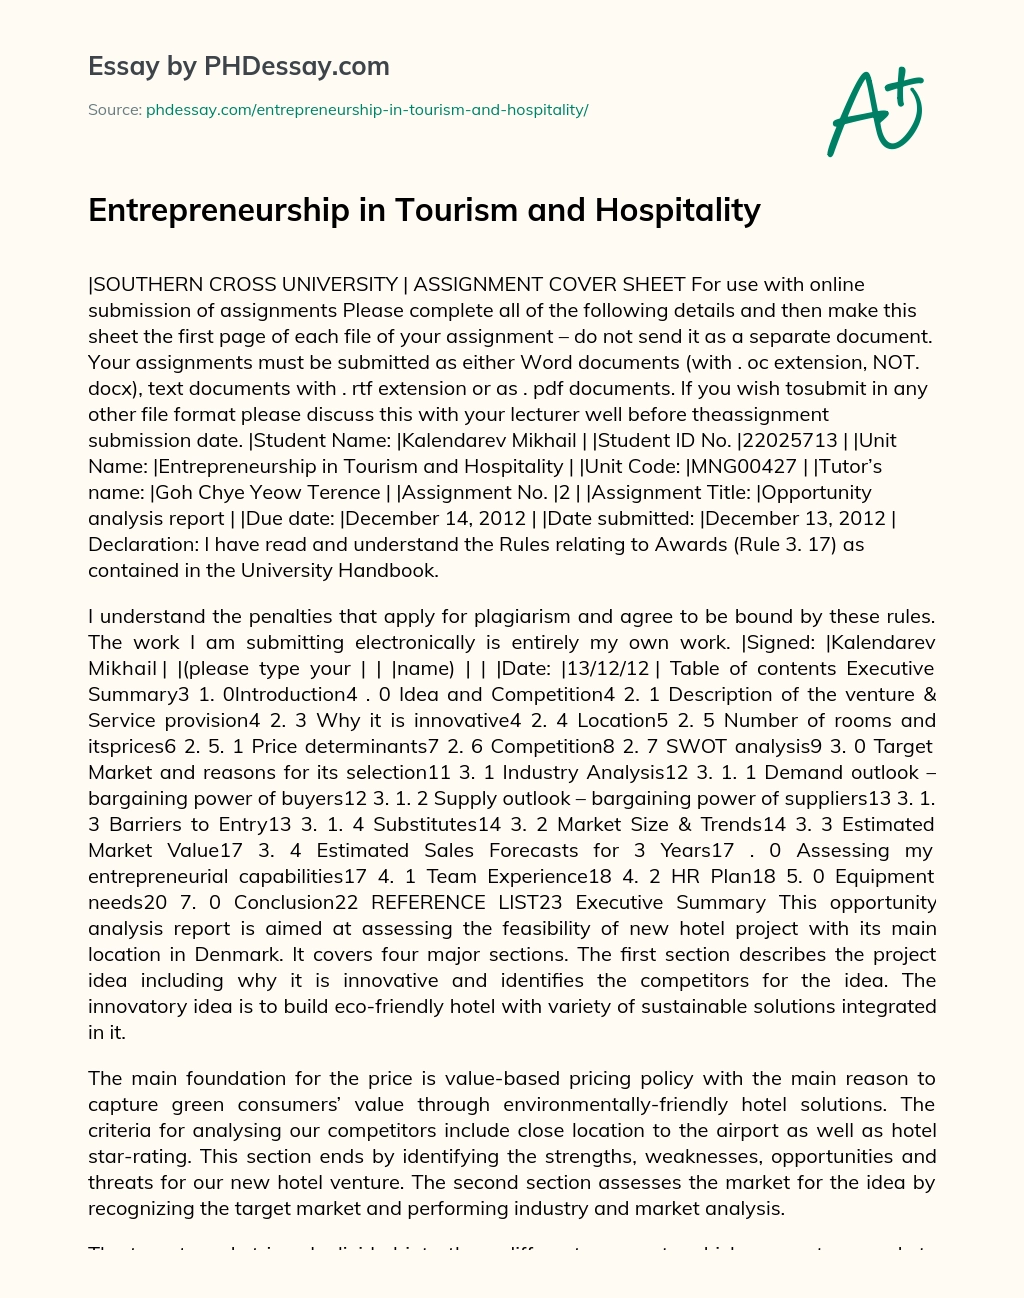 Entrepreneurship in Tourism and Hospitality essay